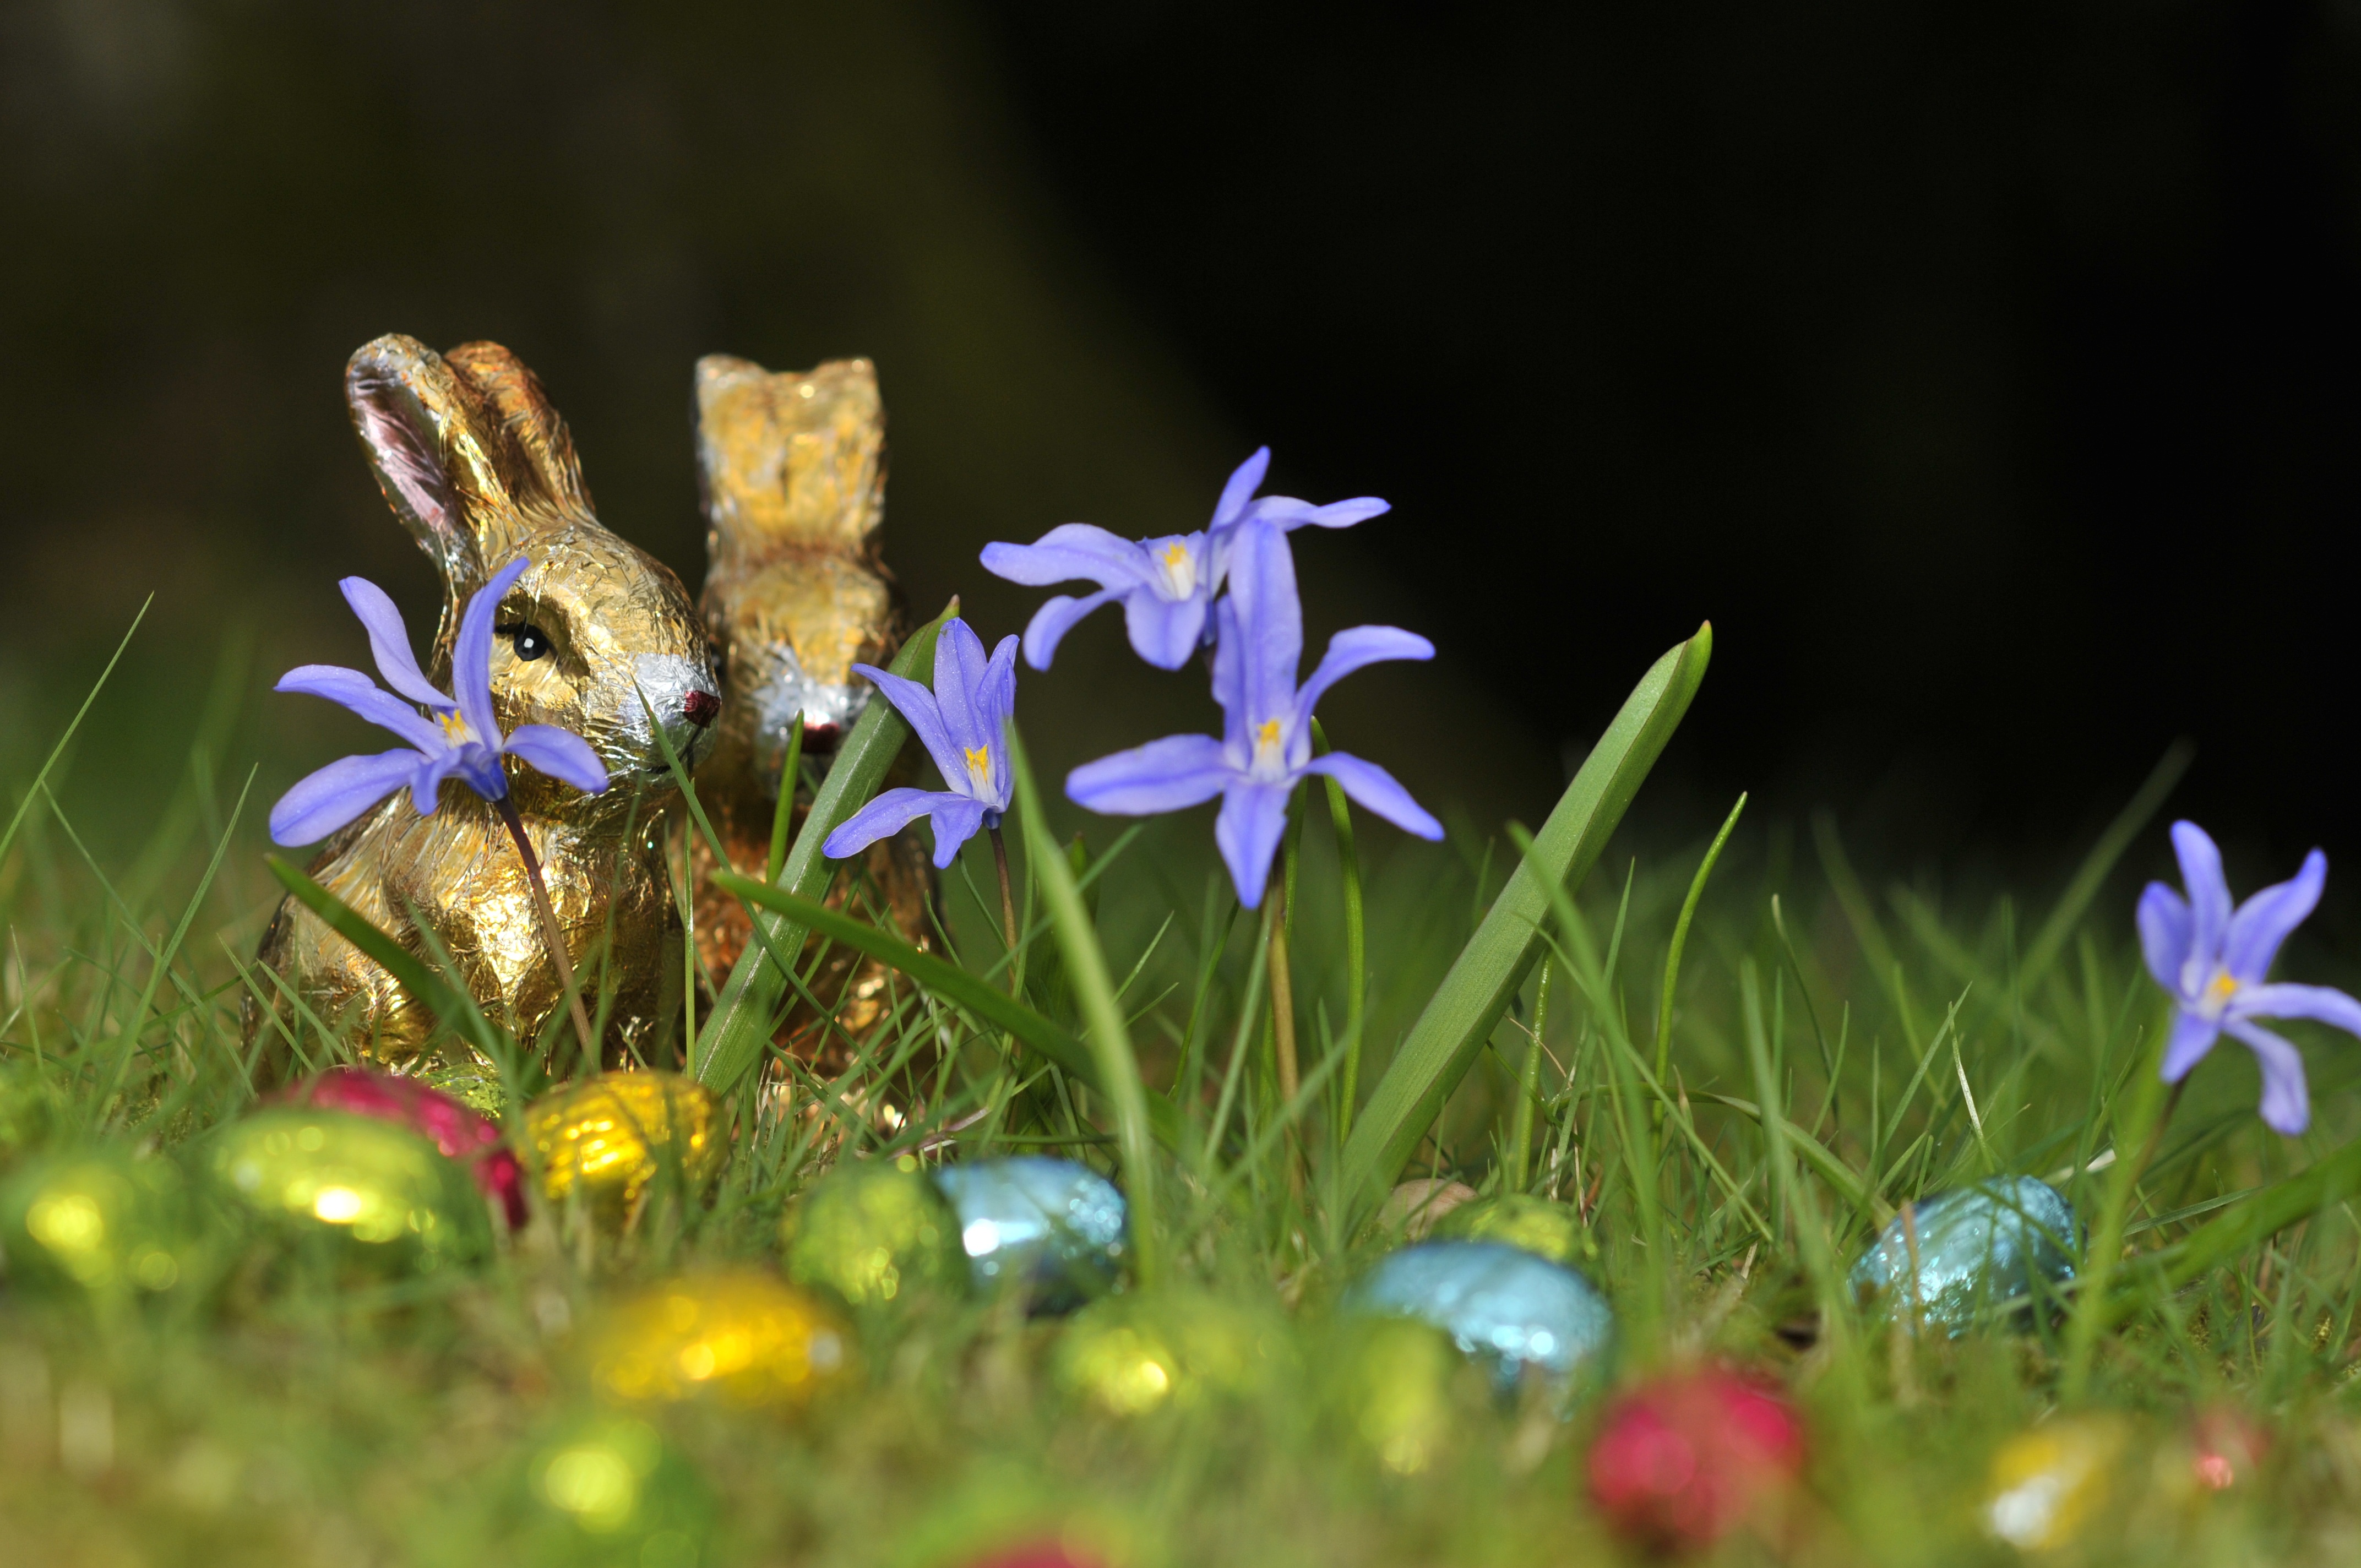 holidays, flowers, grass, eggs, easter, chocolate bunnies, chocolate hares